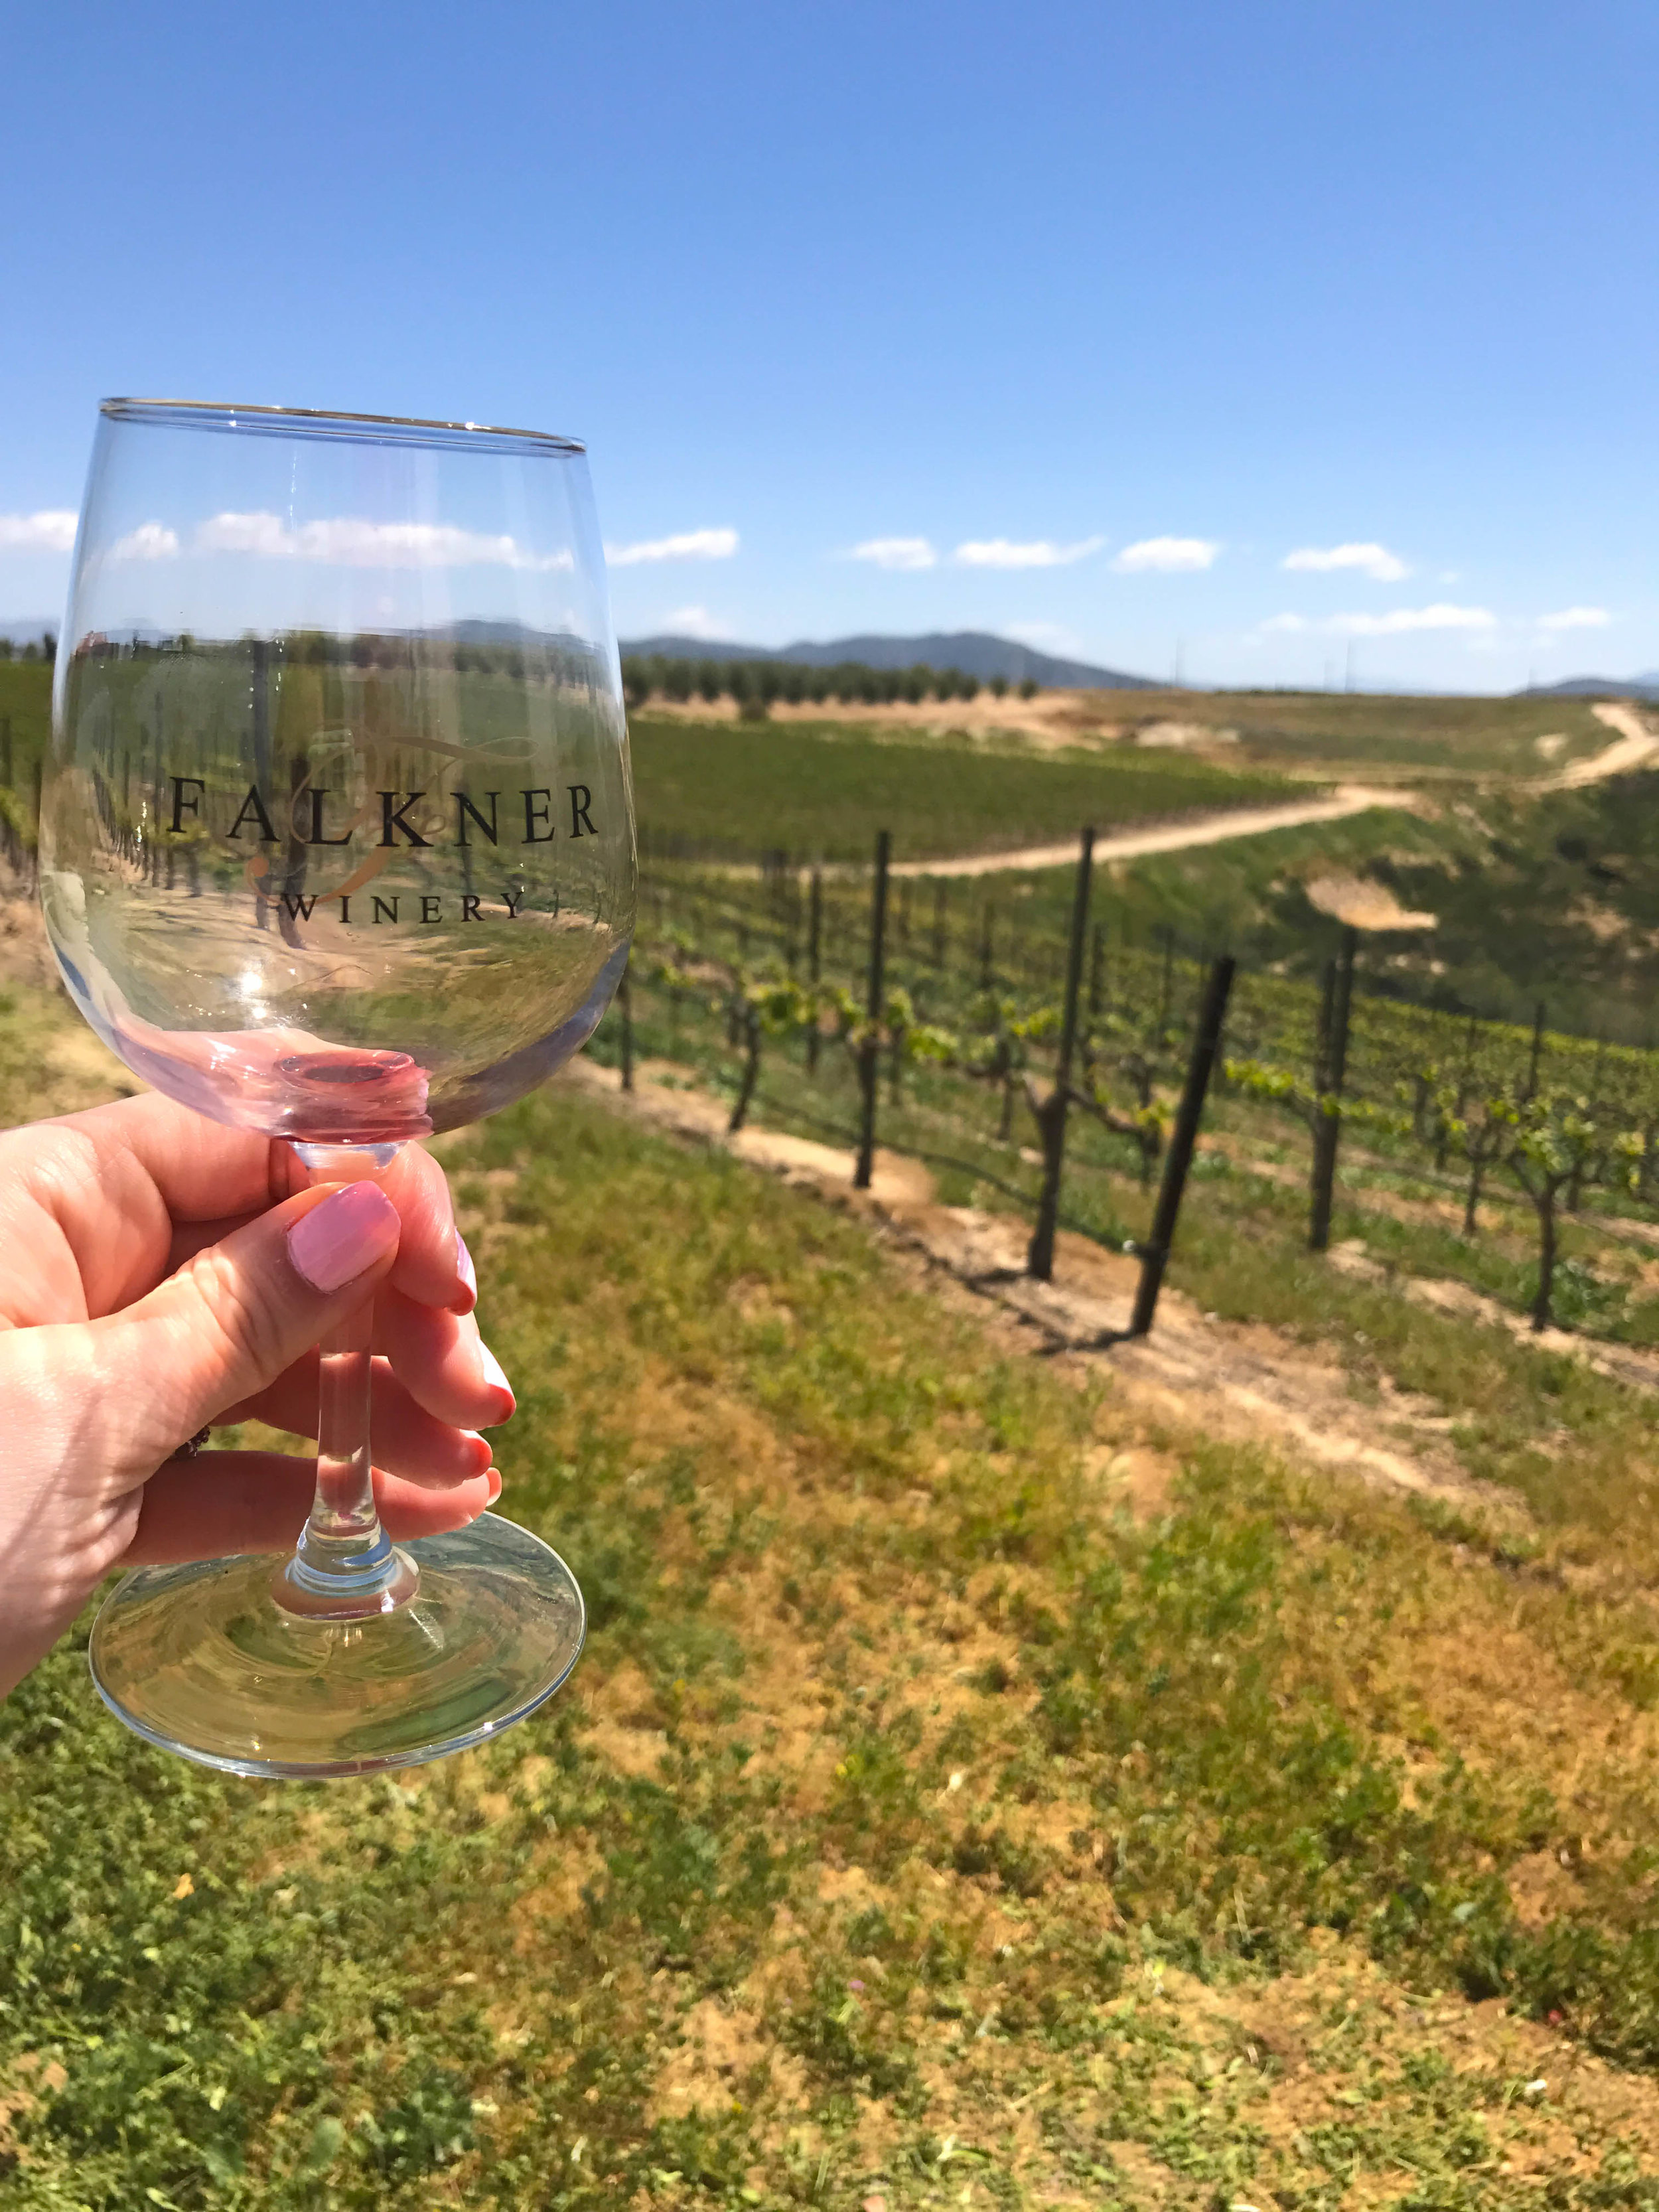 Wine tasting in Temecula, CA - Falkner Winery